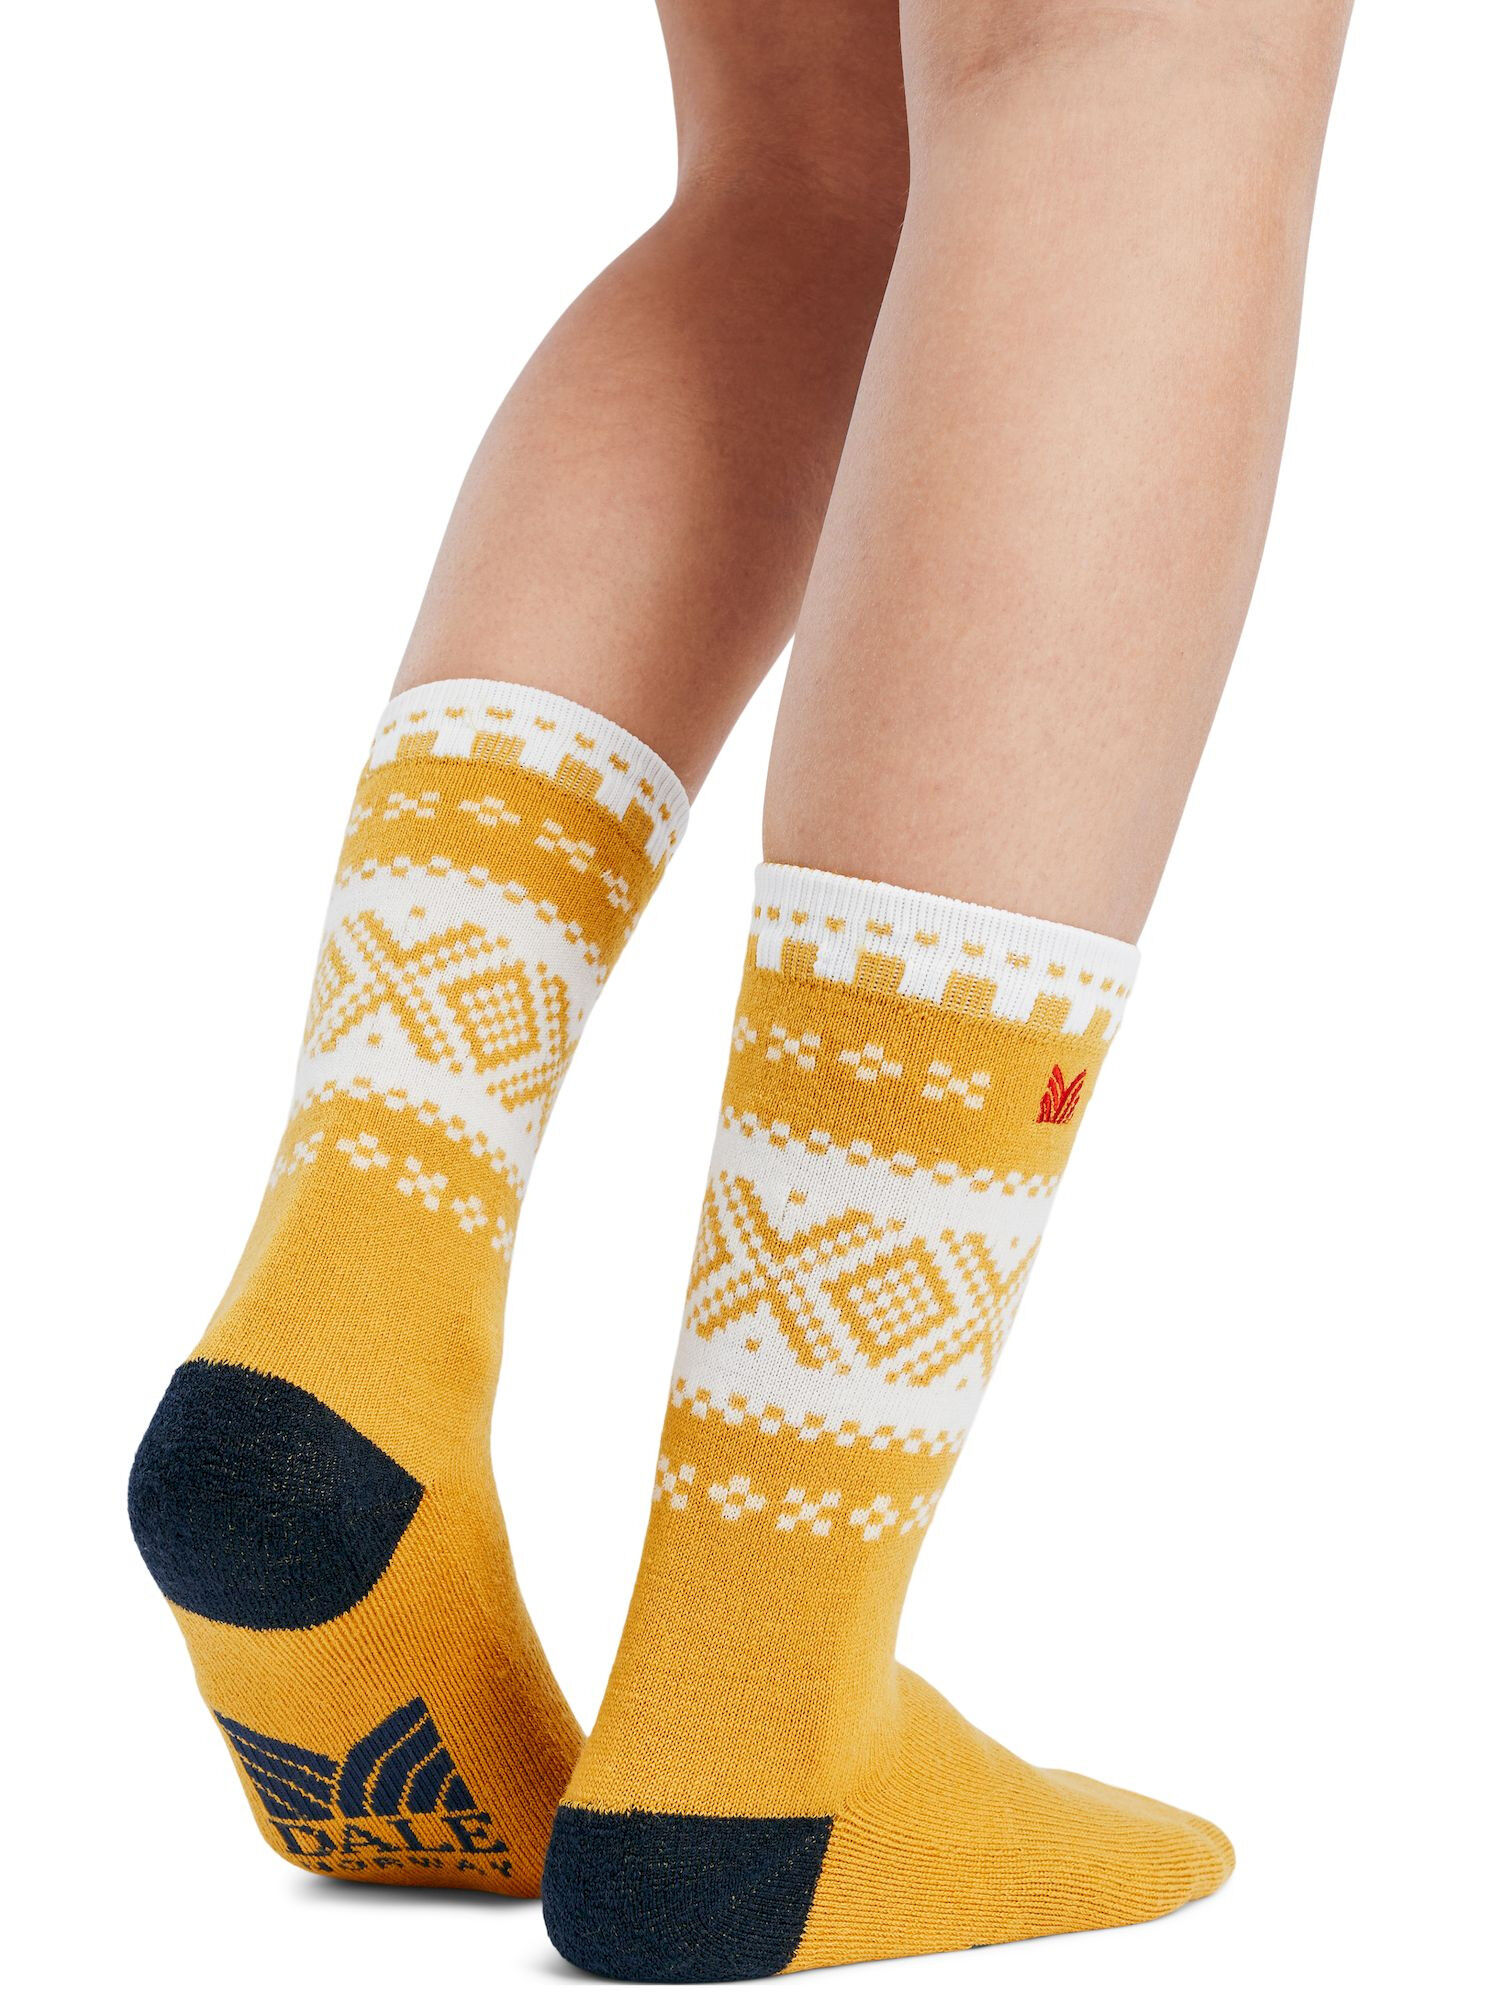 Dale of Norway Cortina Socks  - Hiking socks